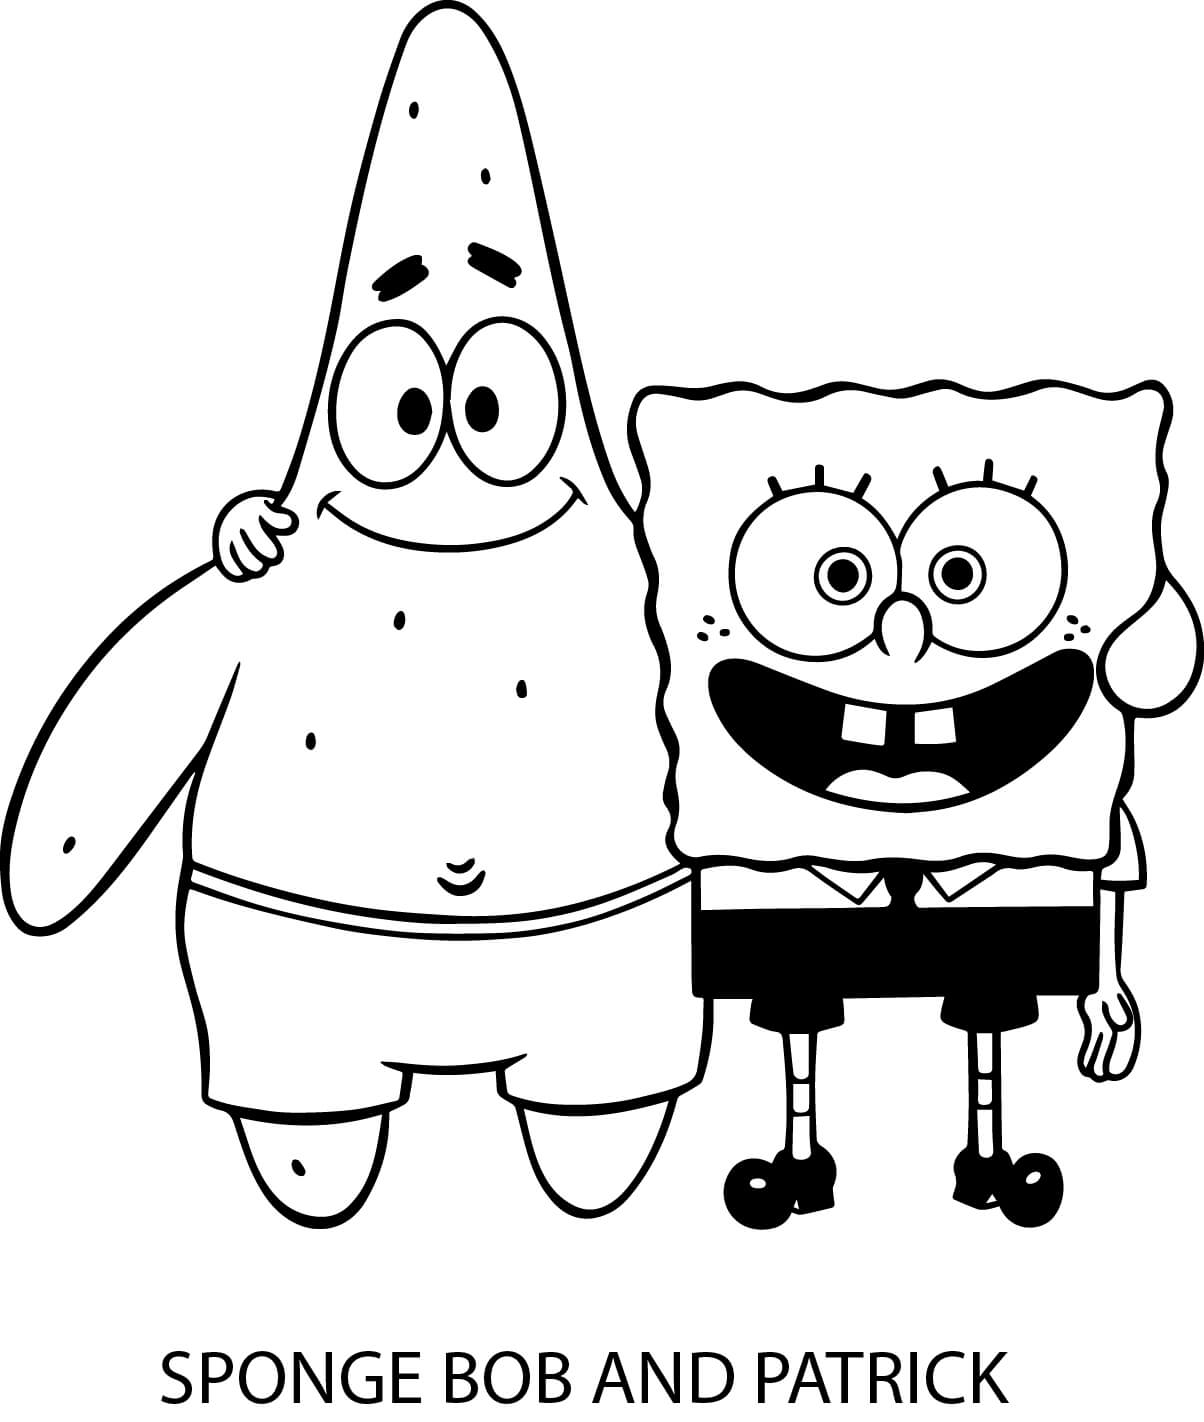 Spongebob And Patrick Coloring Page Printable